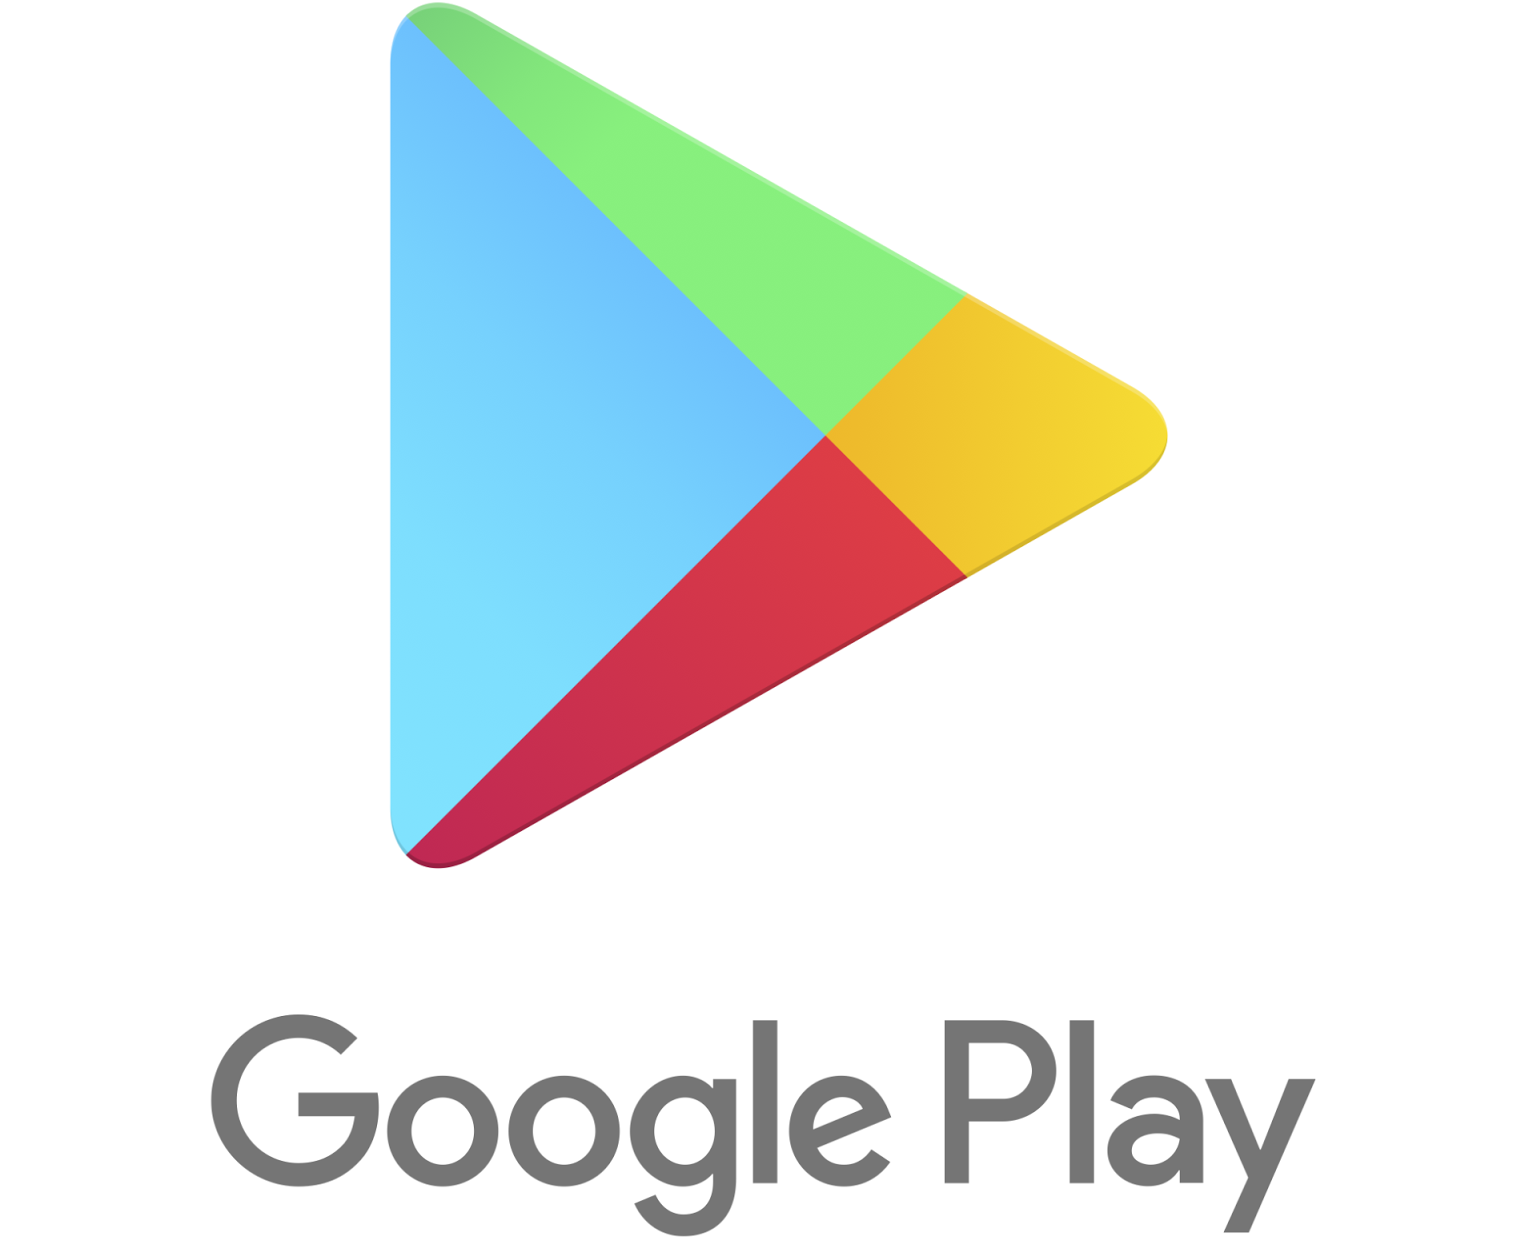 Google play app